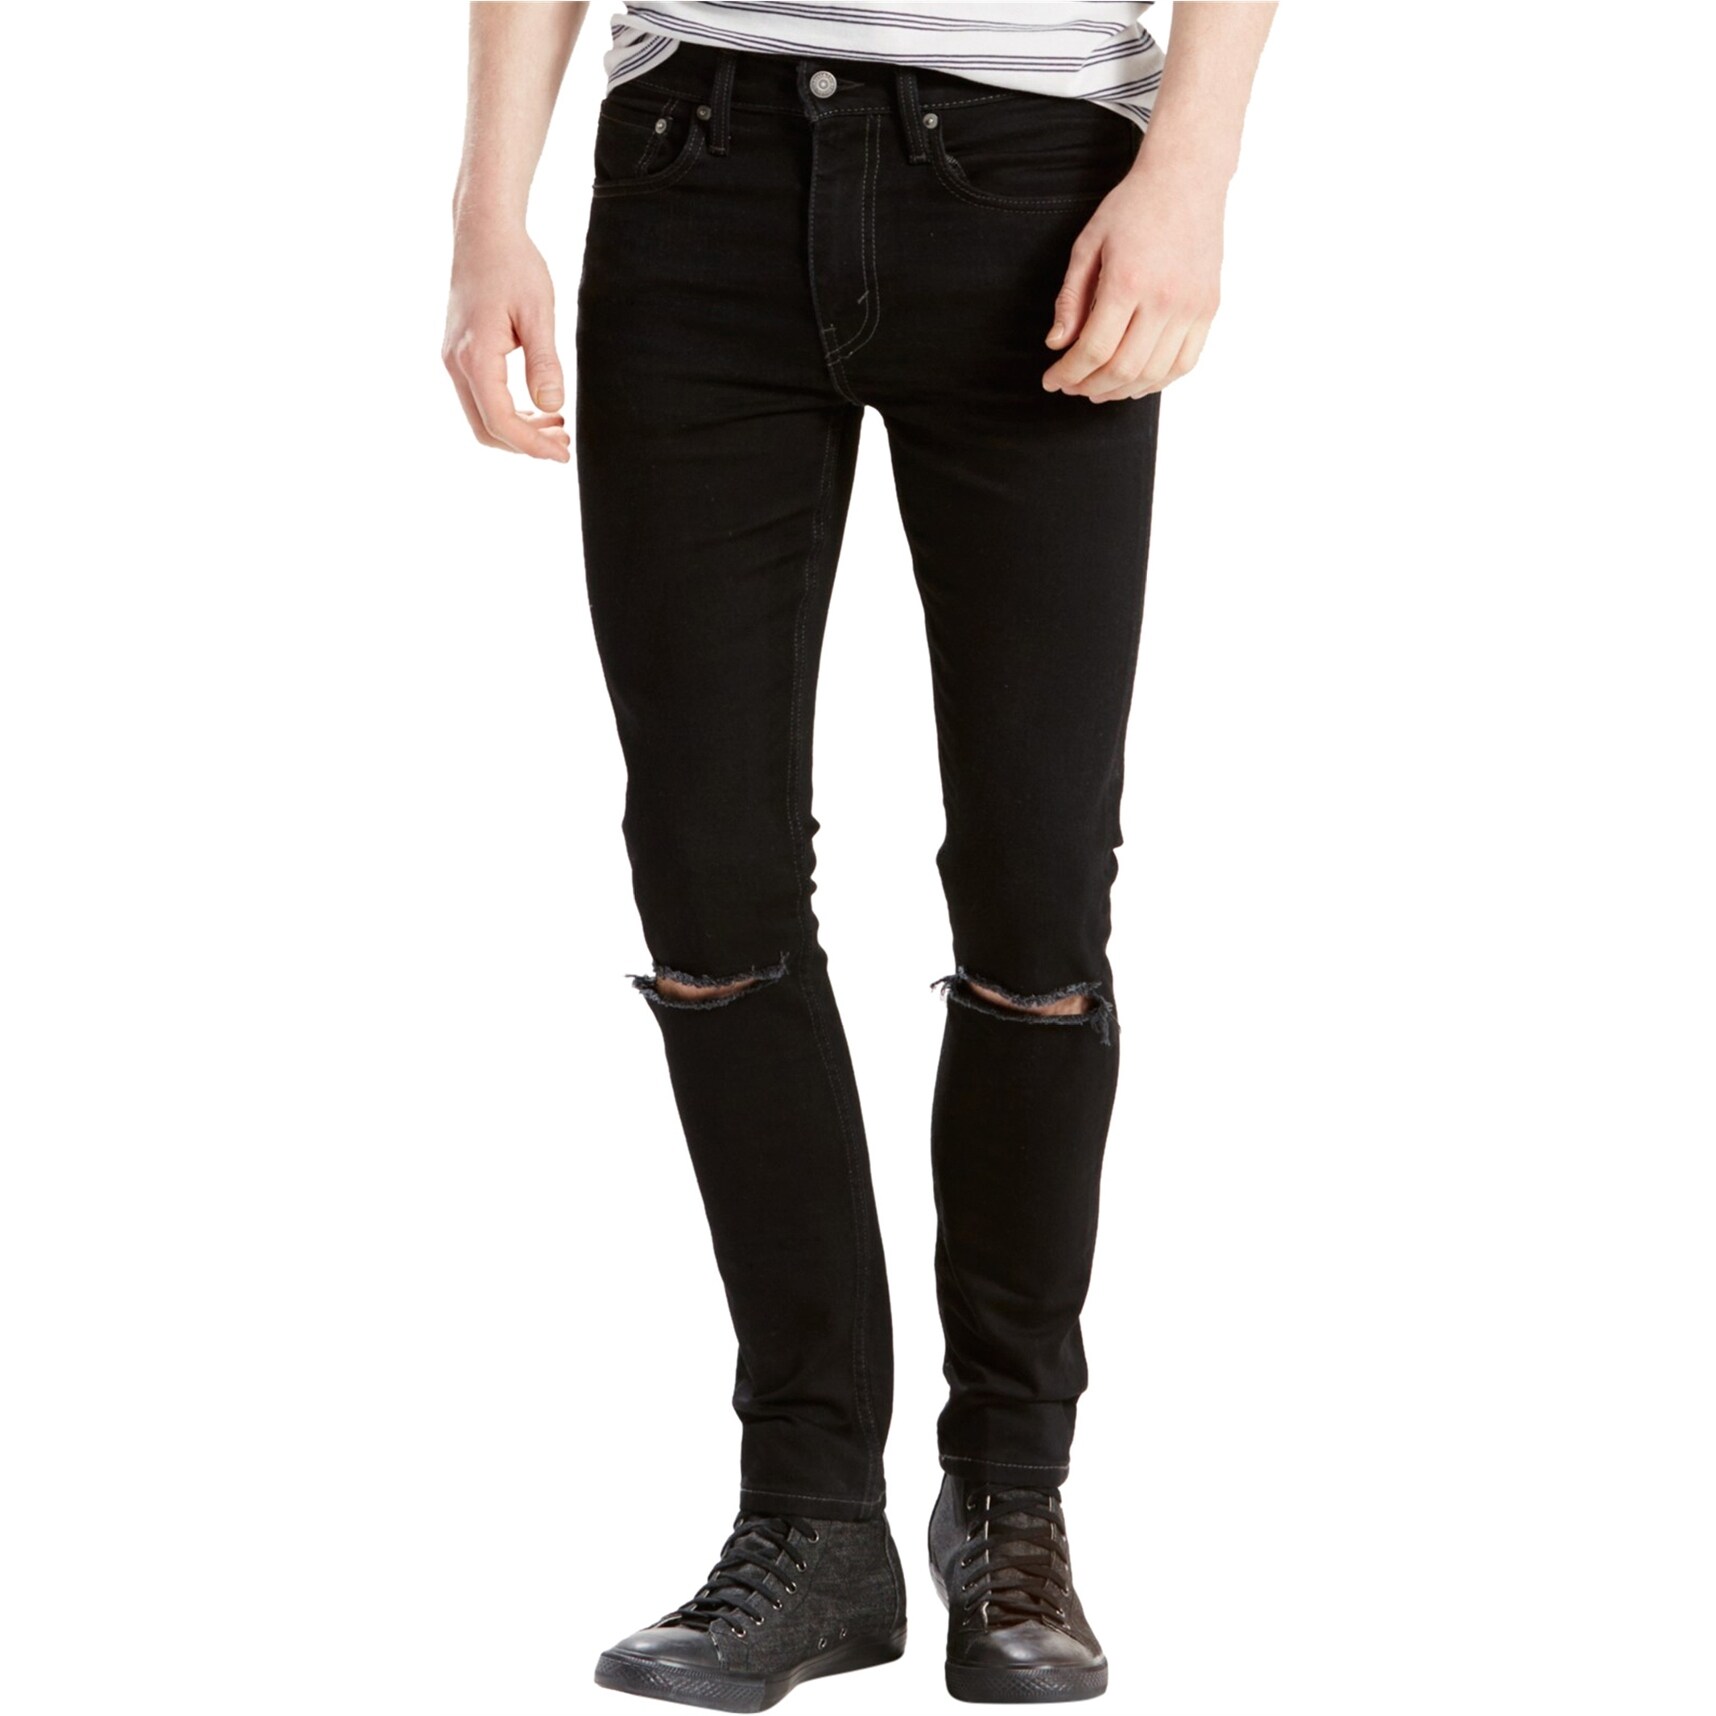 Black levi's ripped jeans